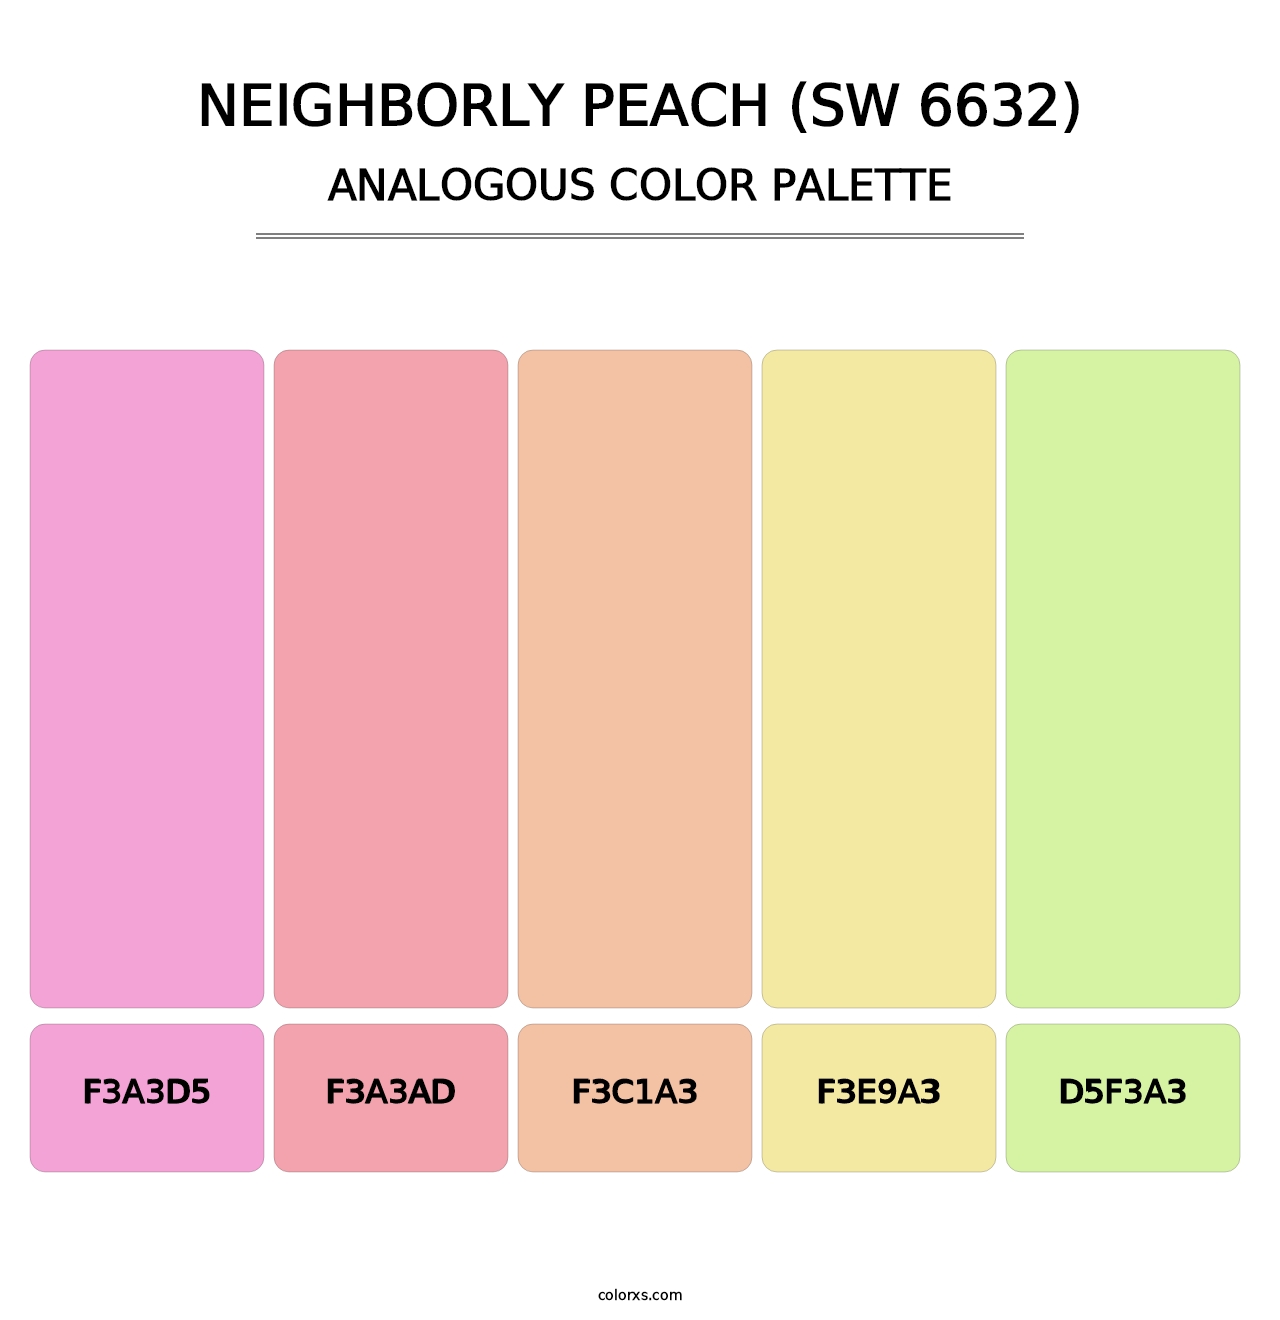 Neighborly Peach (SW 6632) - Analogous Color Palette